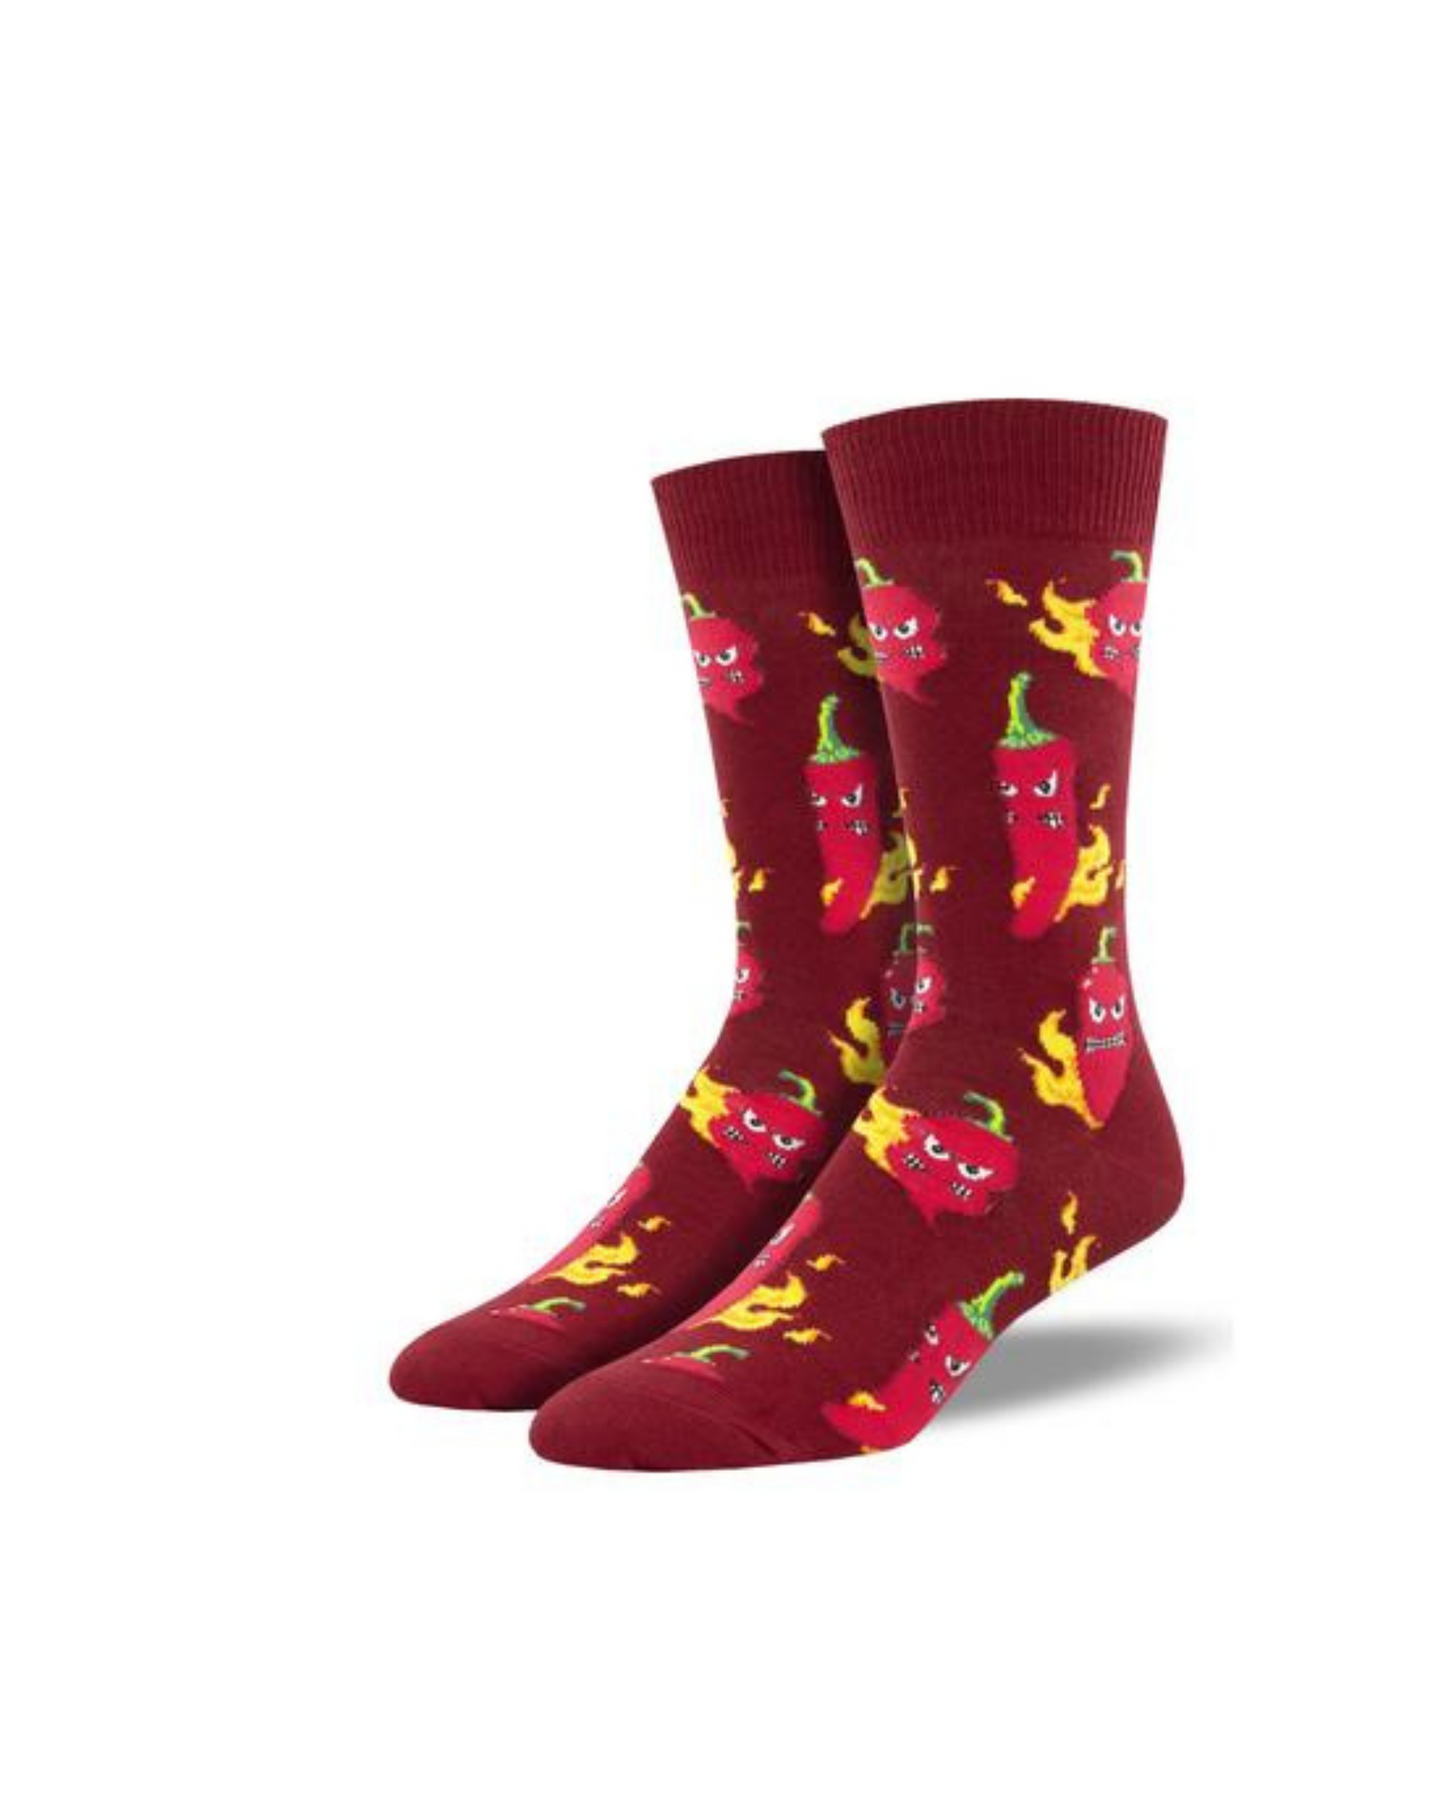 Socksmith Hot Stuff Socks - - 12_e7ee7a45-f3de-44e7-bb9a-36e9721c1cae